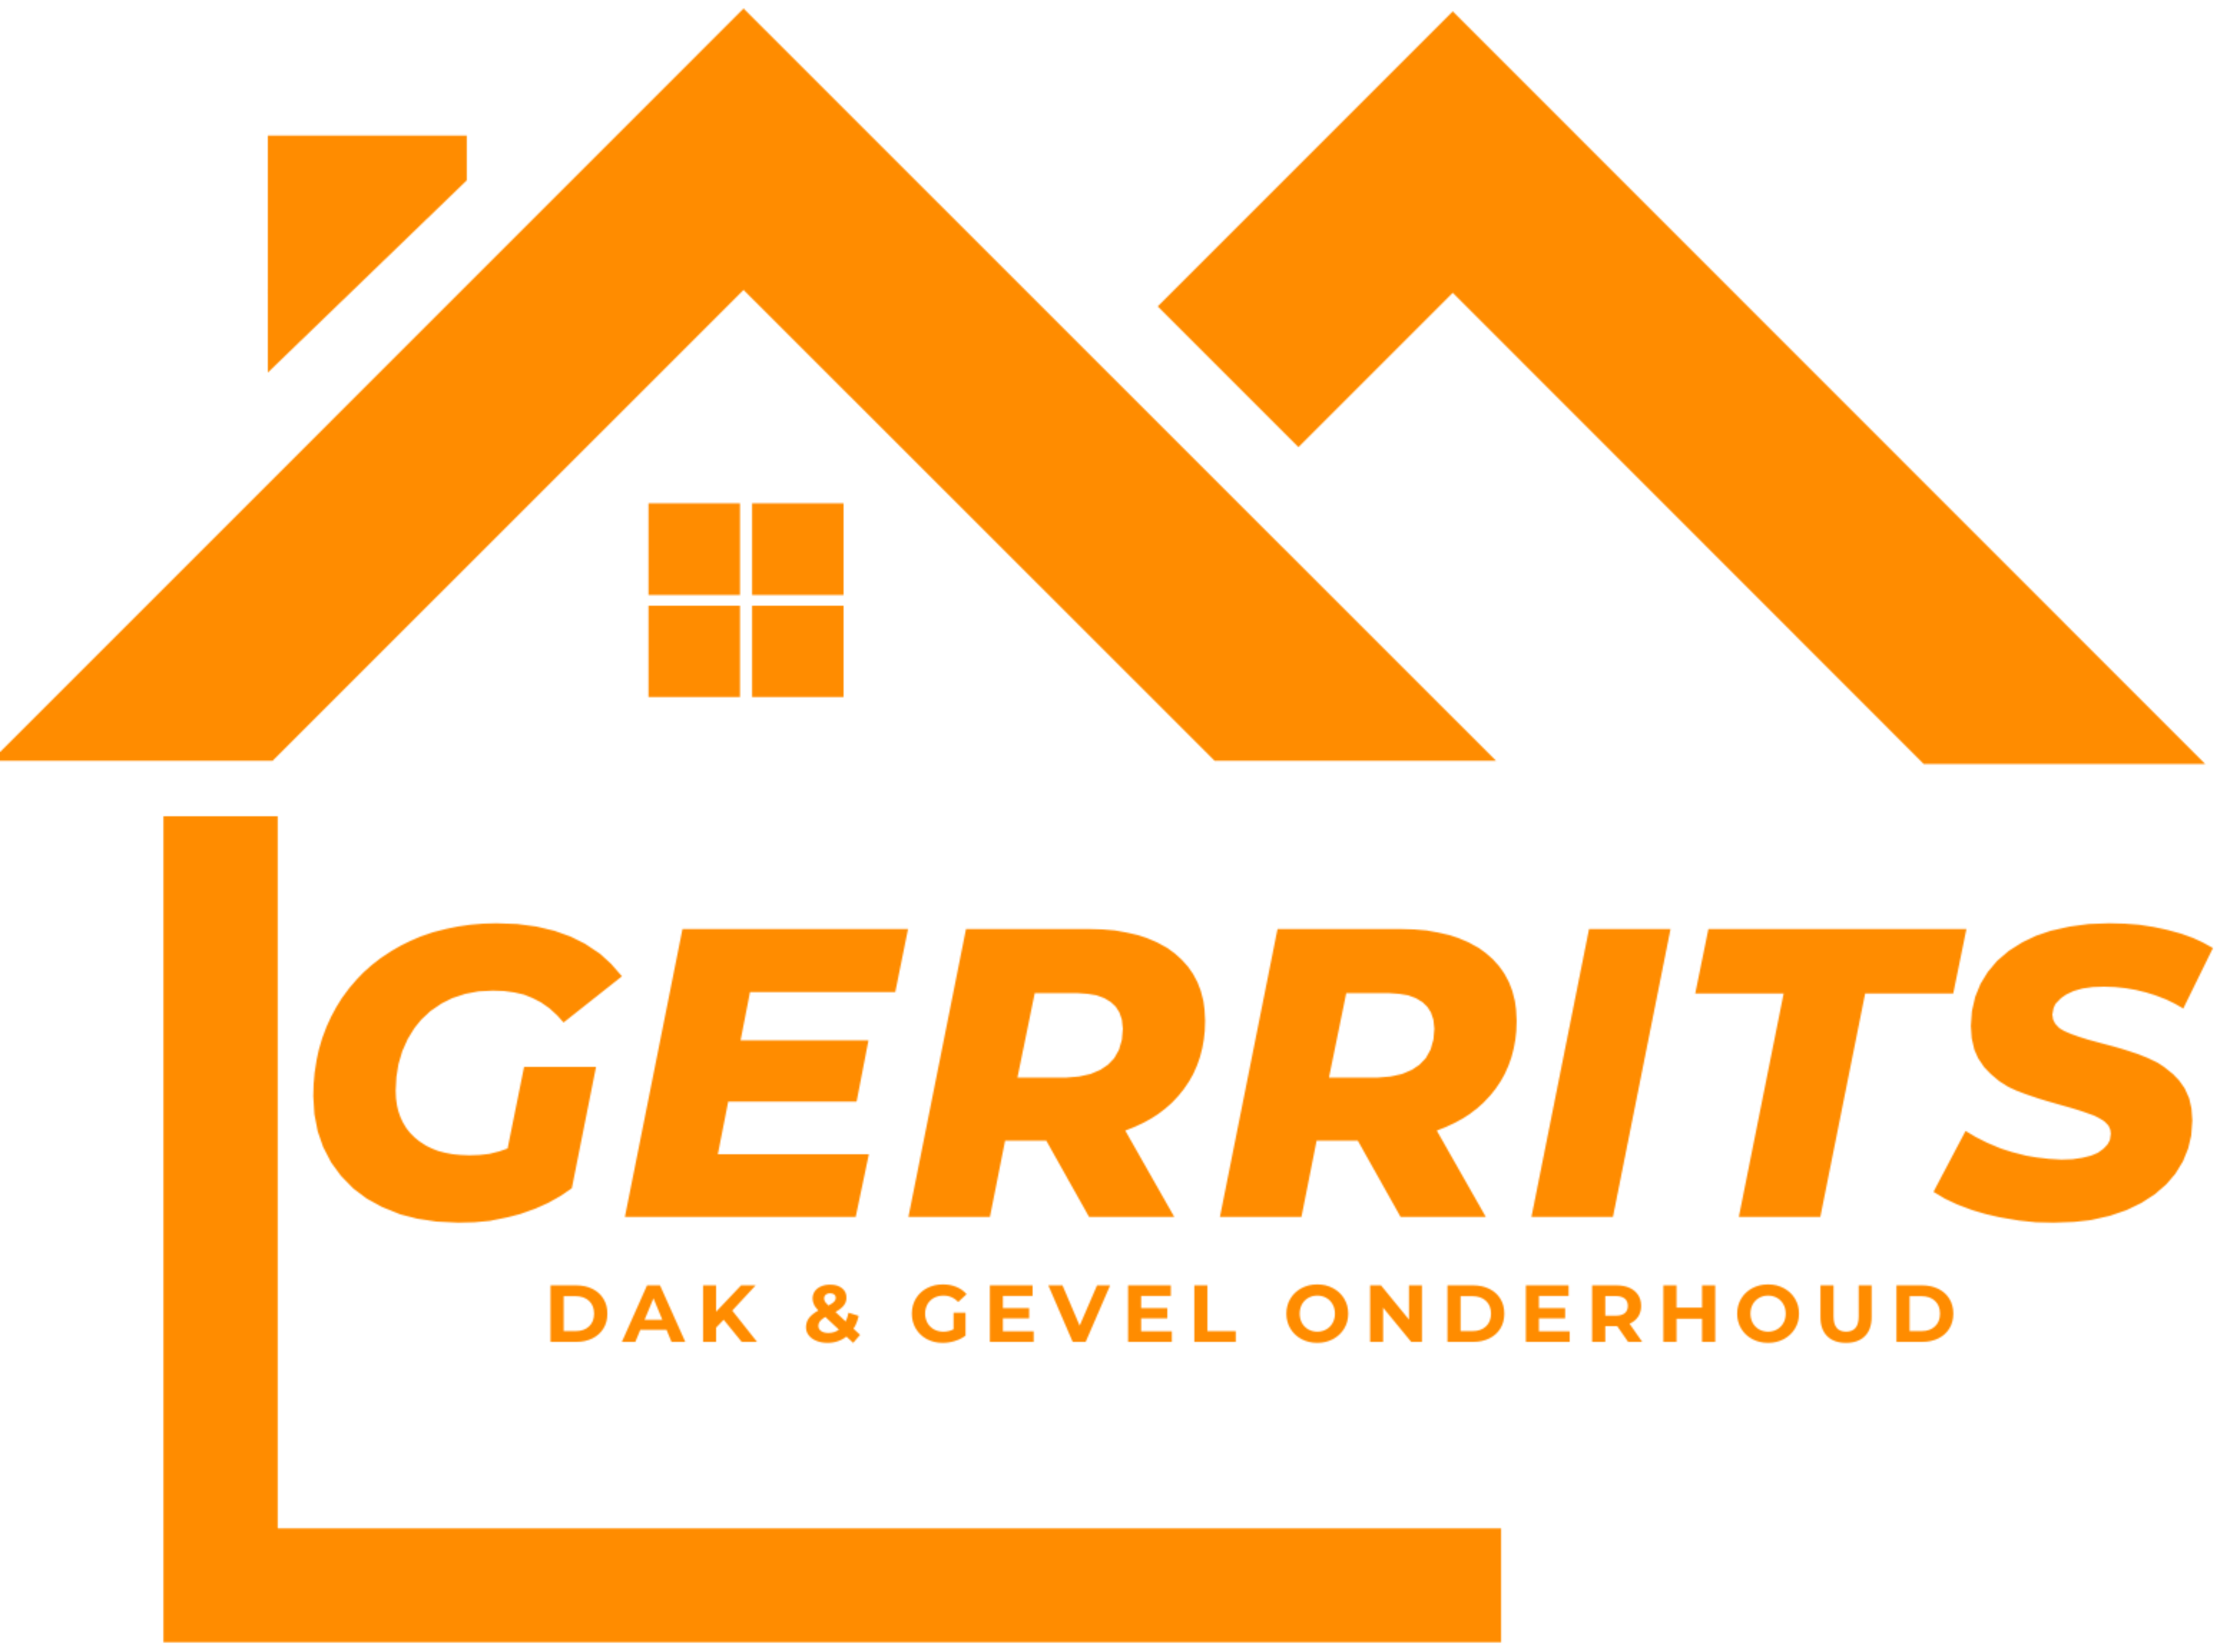 Gerrits Dak & Gevel Onderhoud